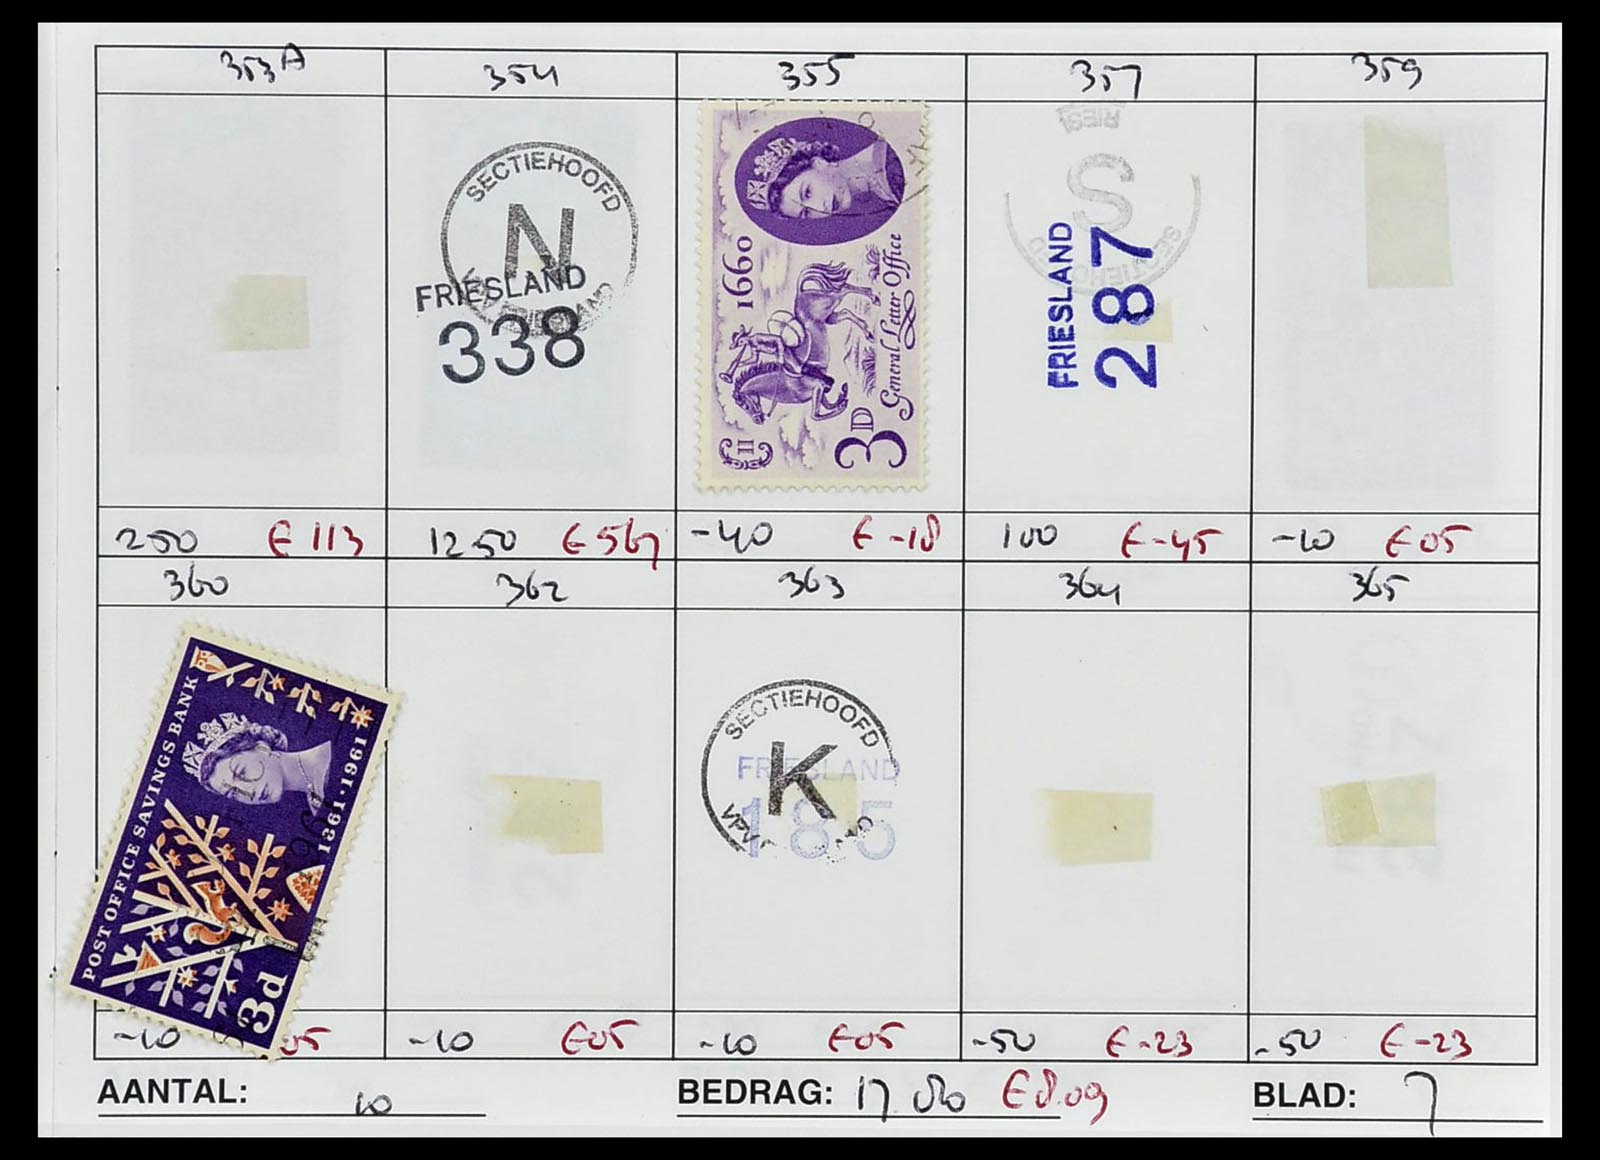 34612 0075 - Stamp Collection 34612 Wereld rondzendboekjes.